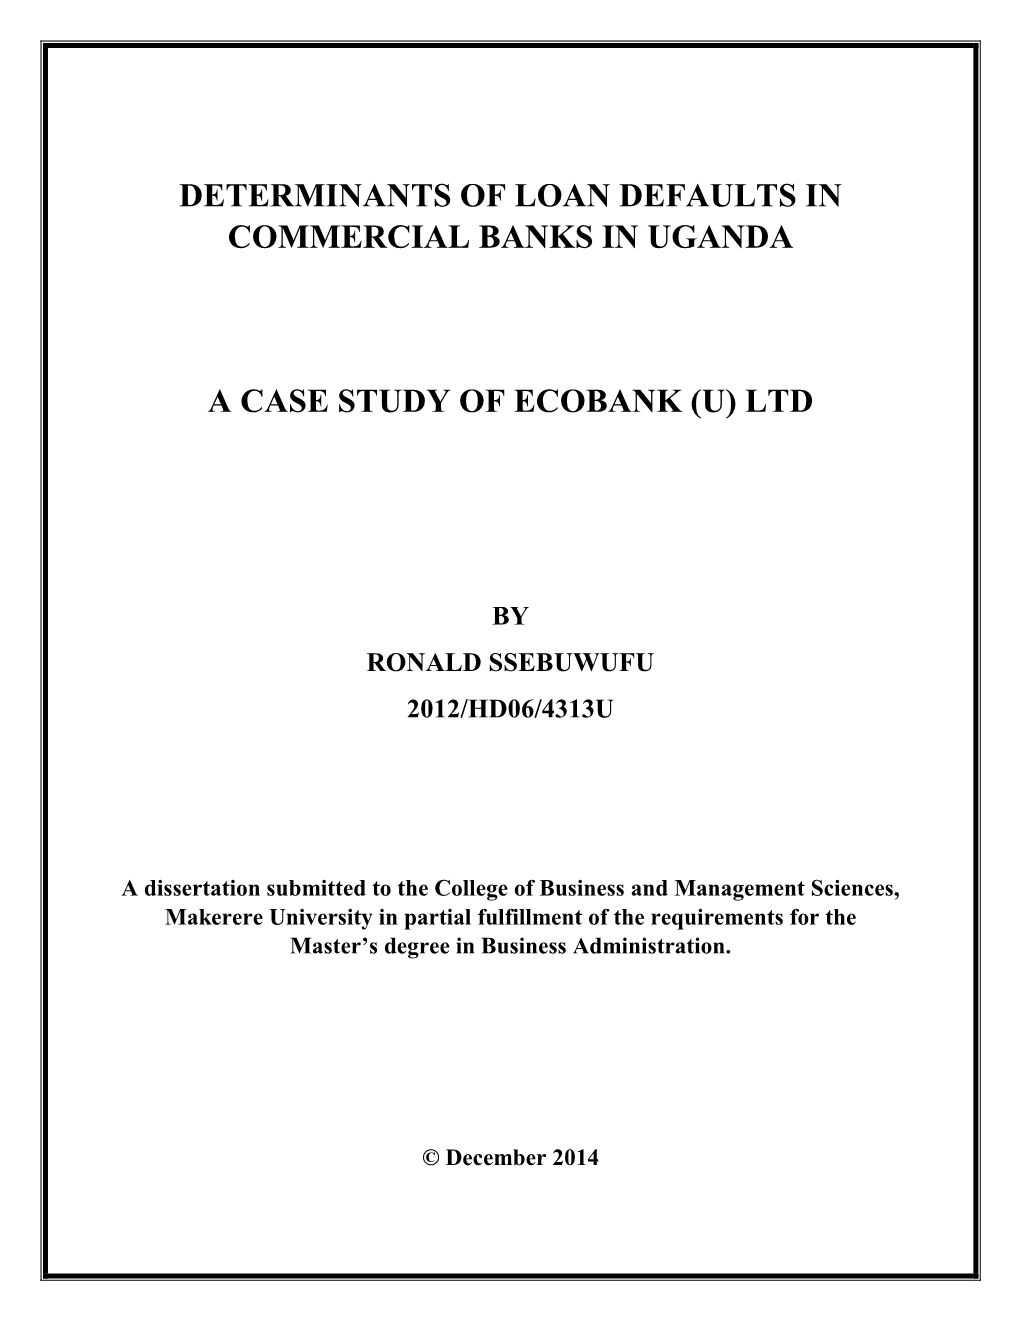 Determinants of Loan Defaults in Commercial Banks in Uganda